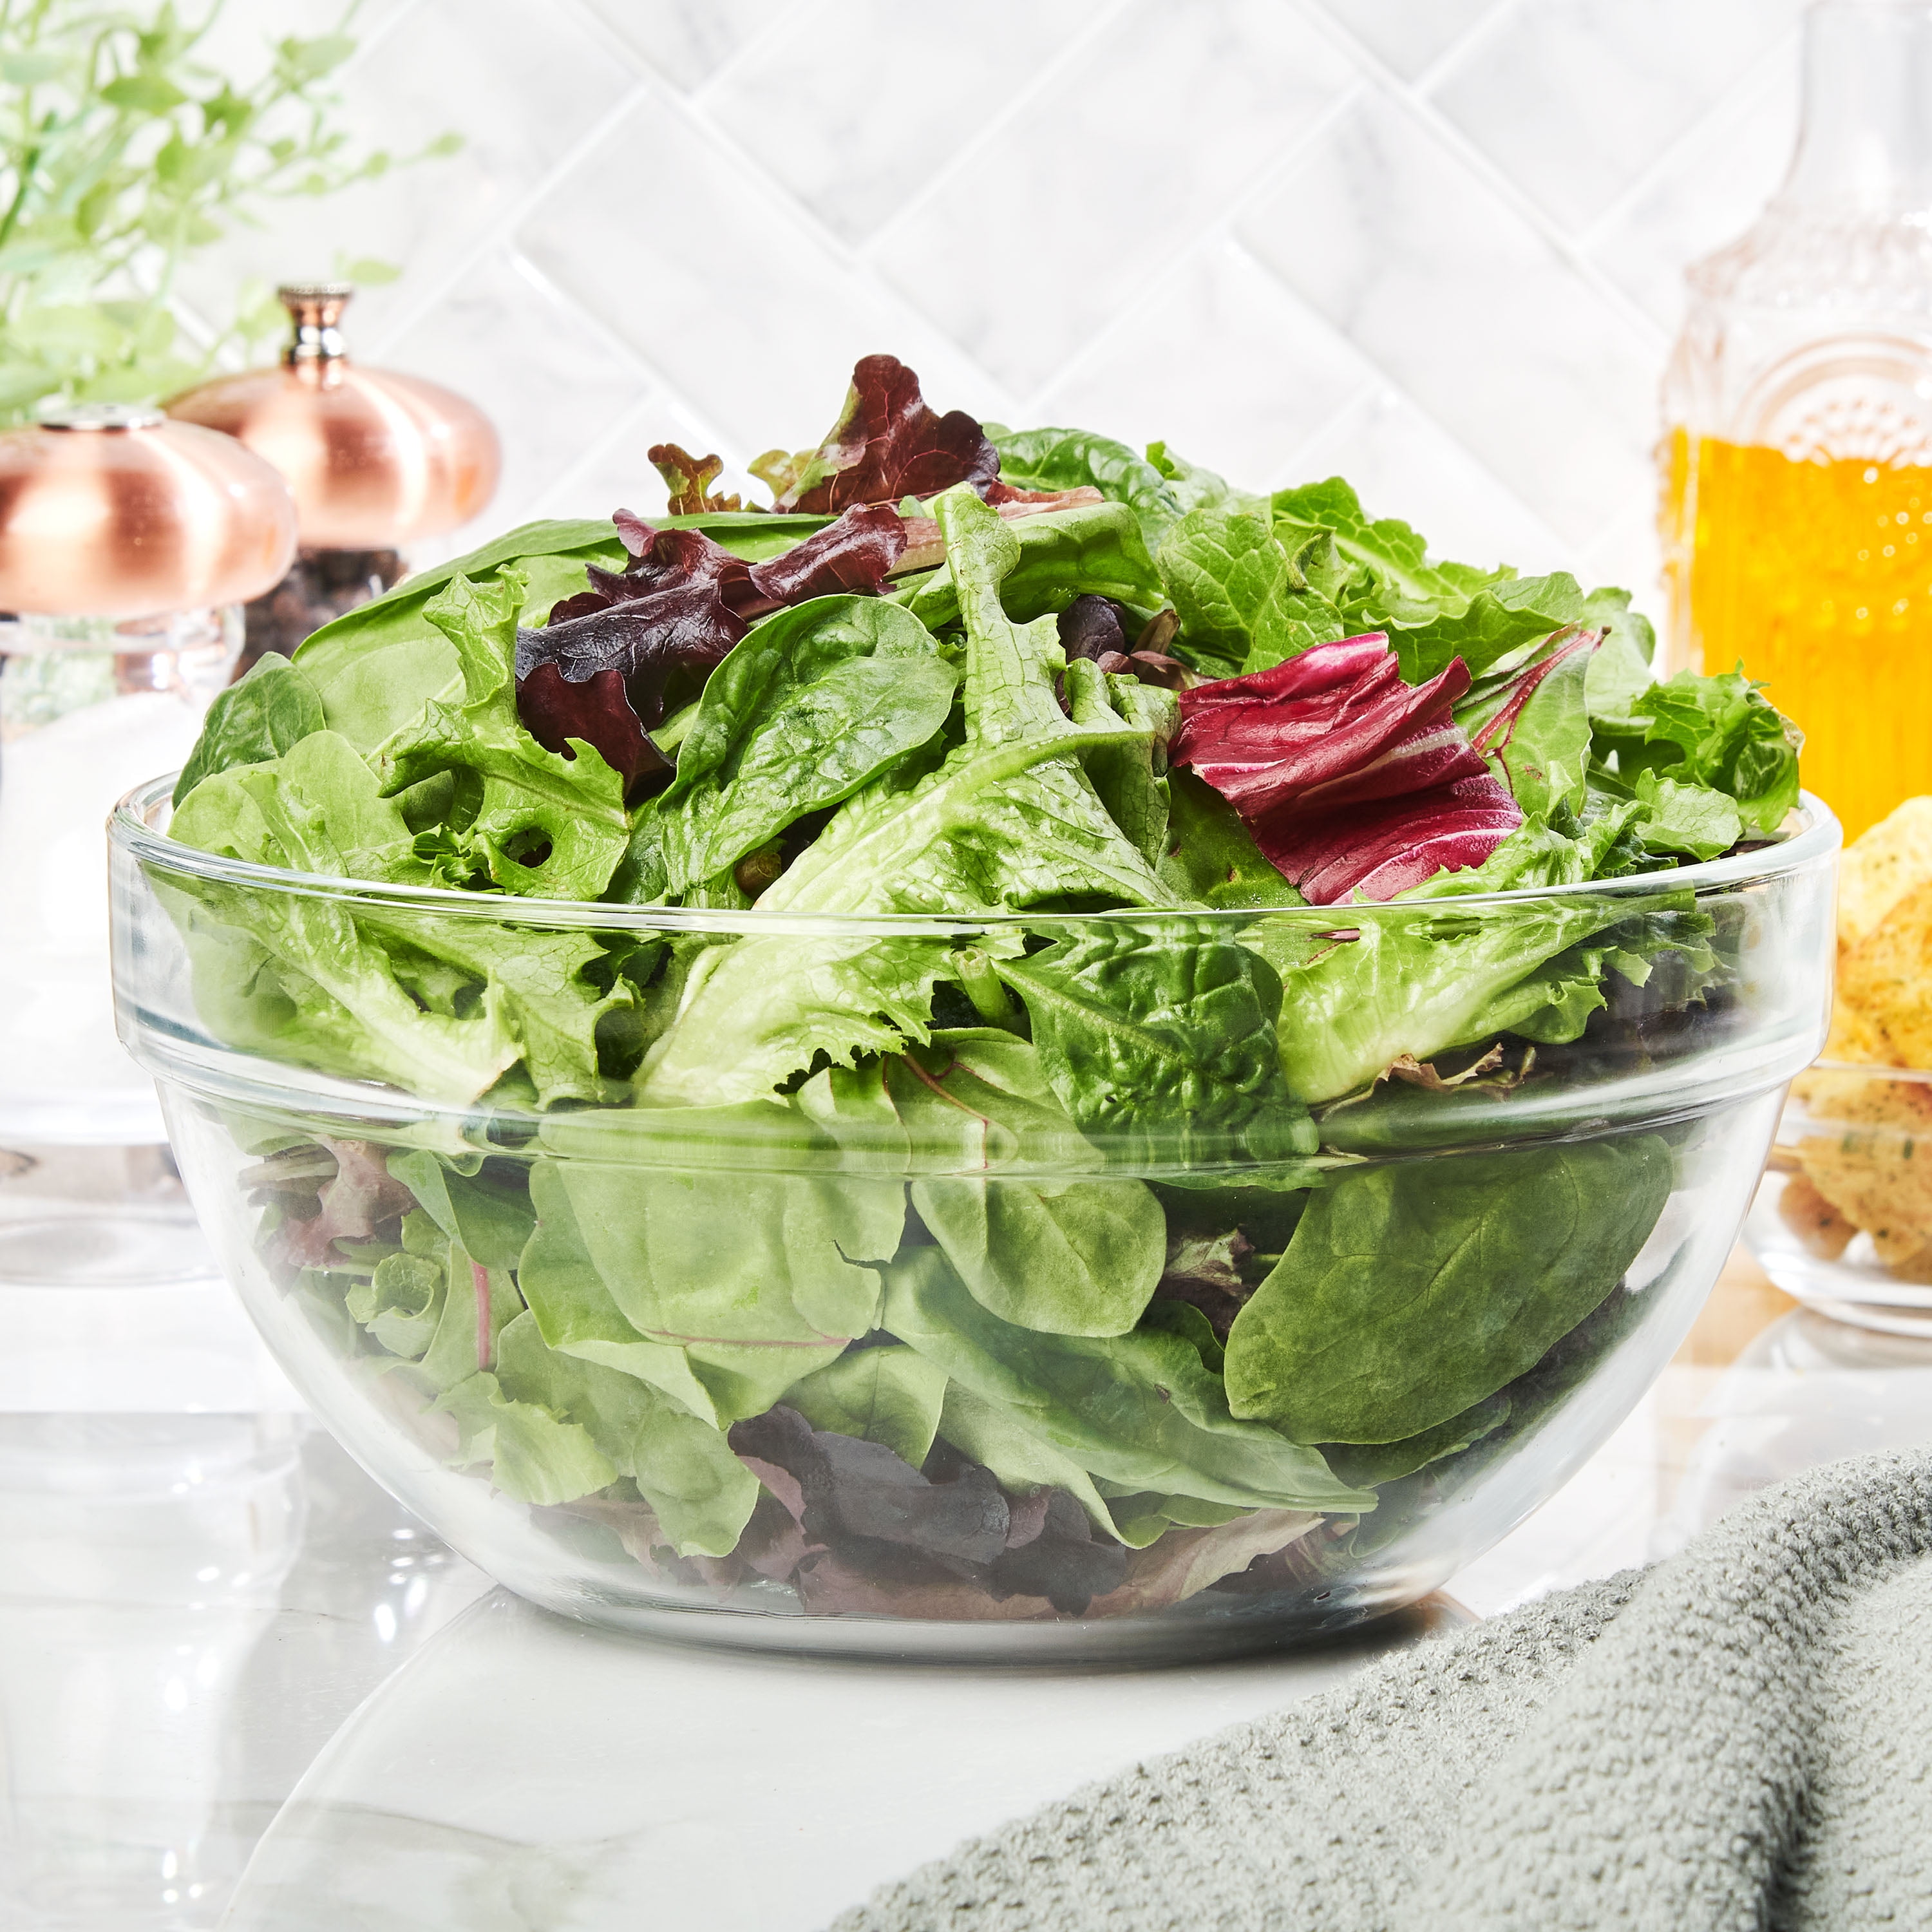 Organic Spring Salad Mix, 1 lb